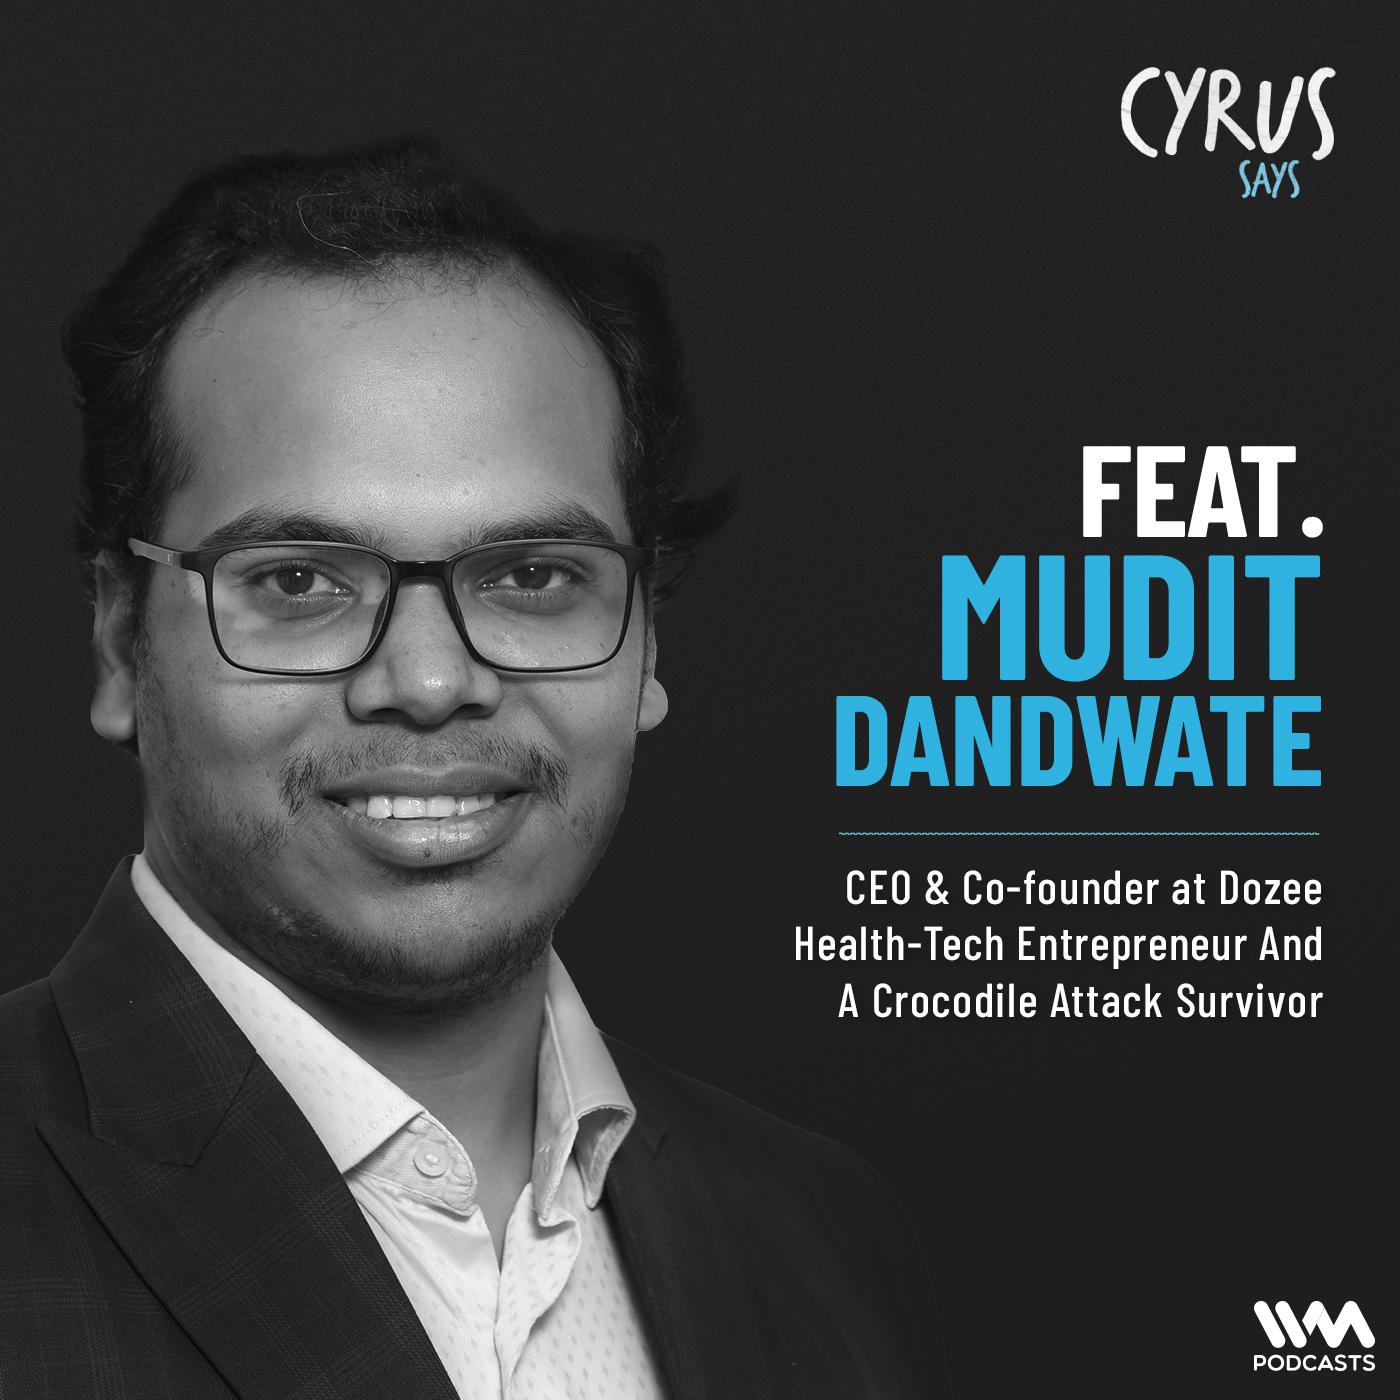 Mudit Dandwate | CEO & Co-founder at Dozee | Health-Tech Entrepreneur And A Crocodile Attack Survivor